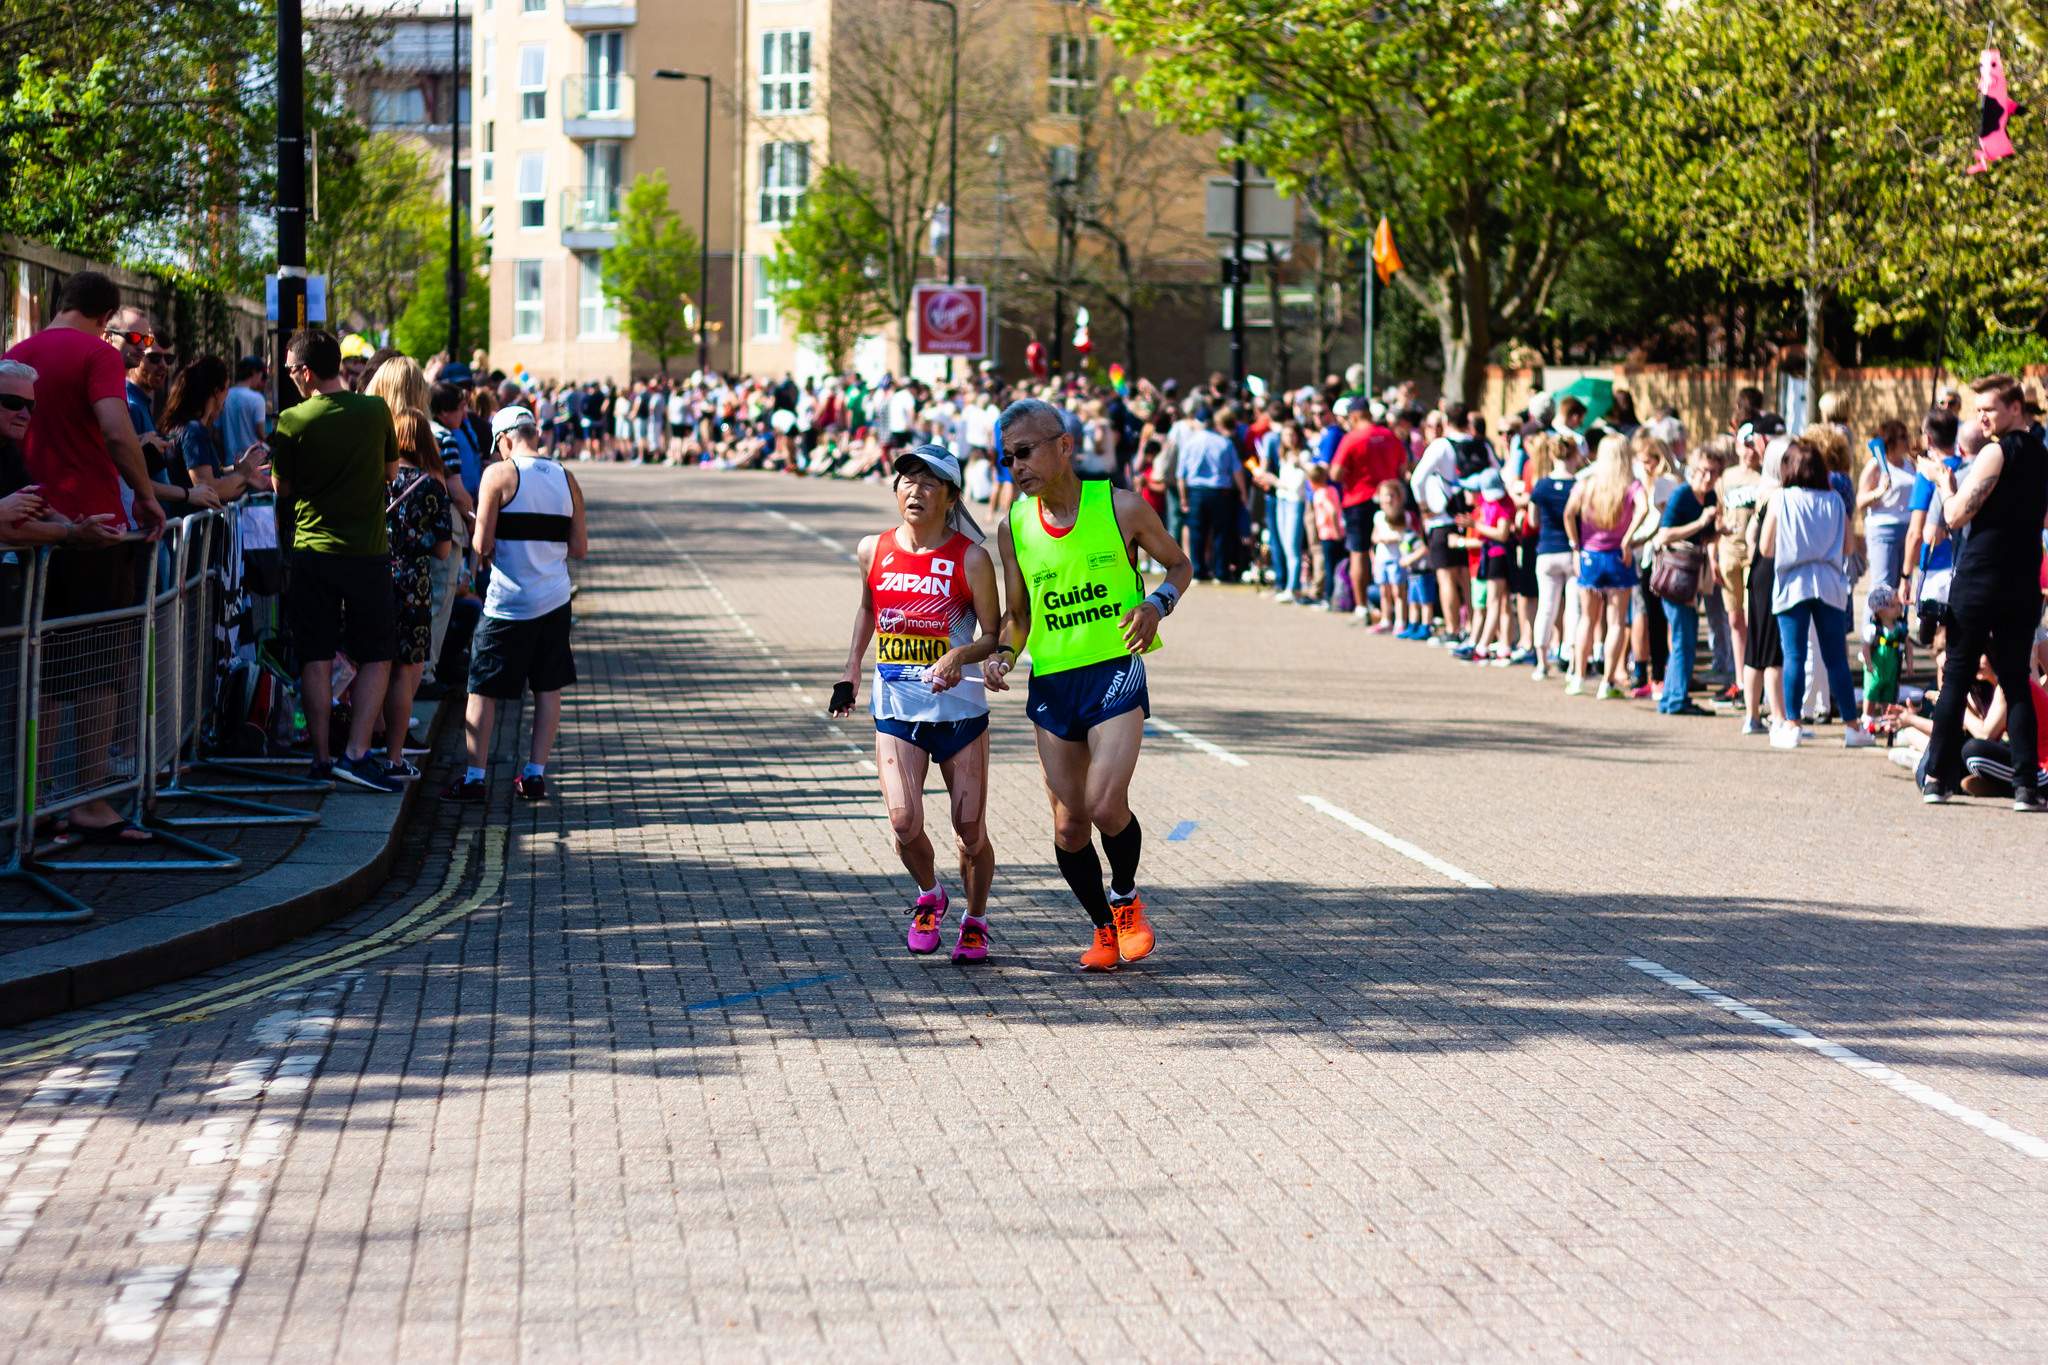 Visually impaired runner from Japan accompanied by her guide runner, 2018 London Marathon